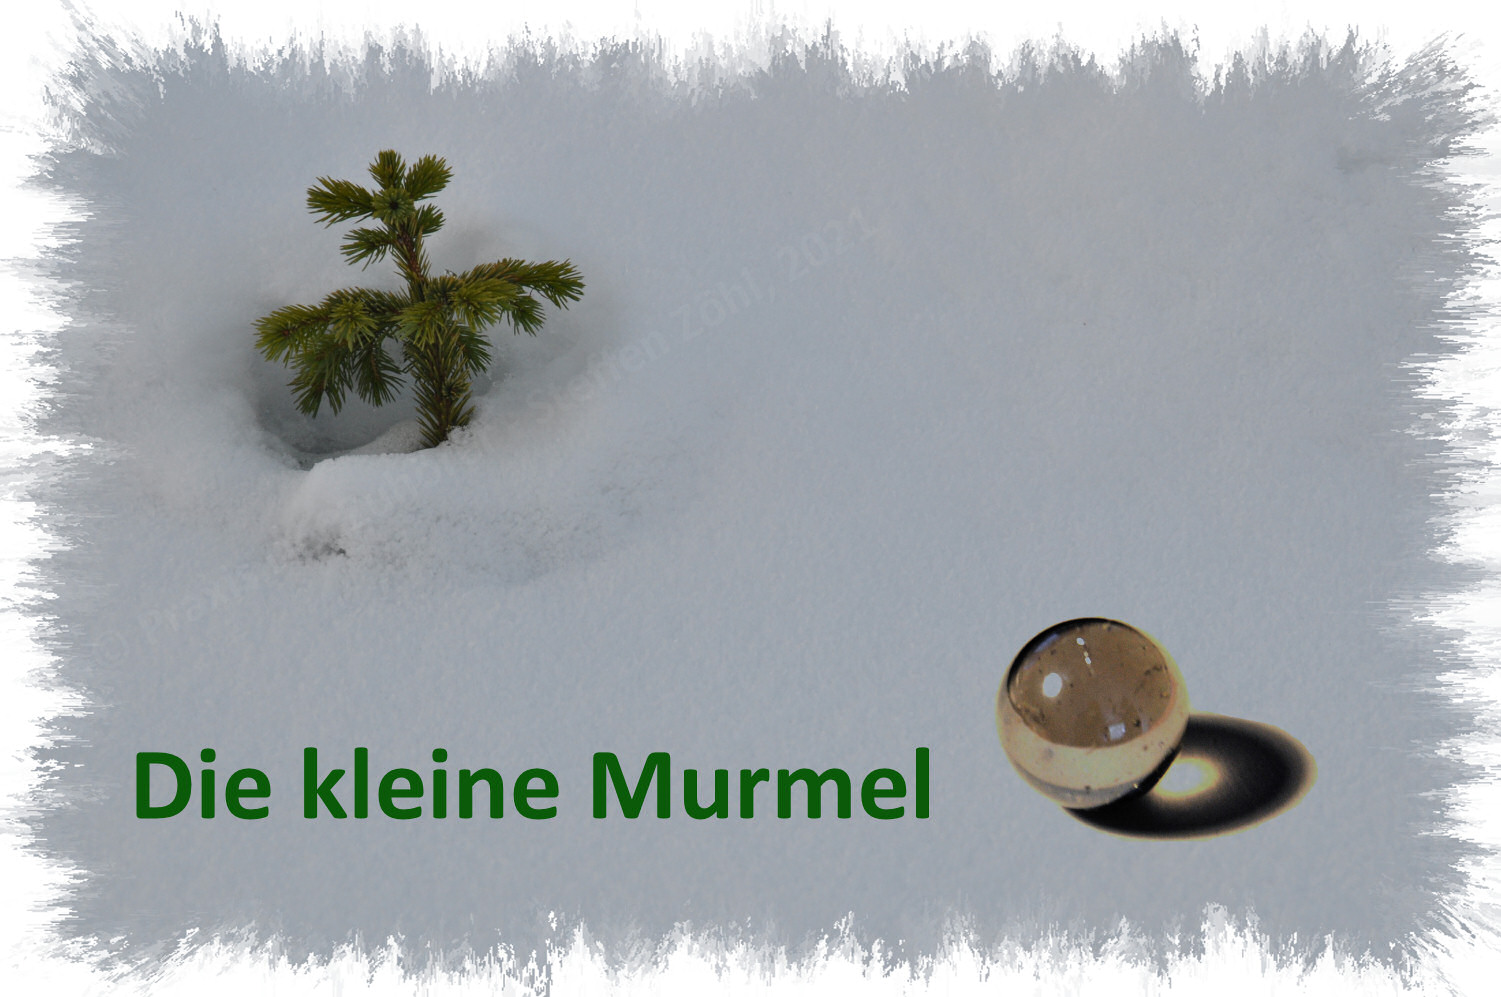 You are currently viewing Die kleine Murmel